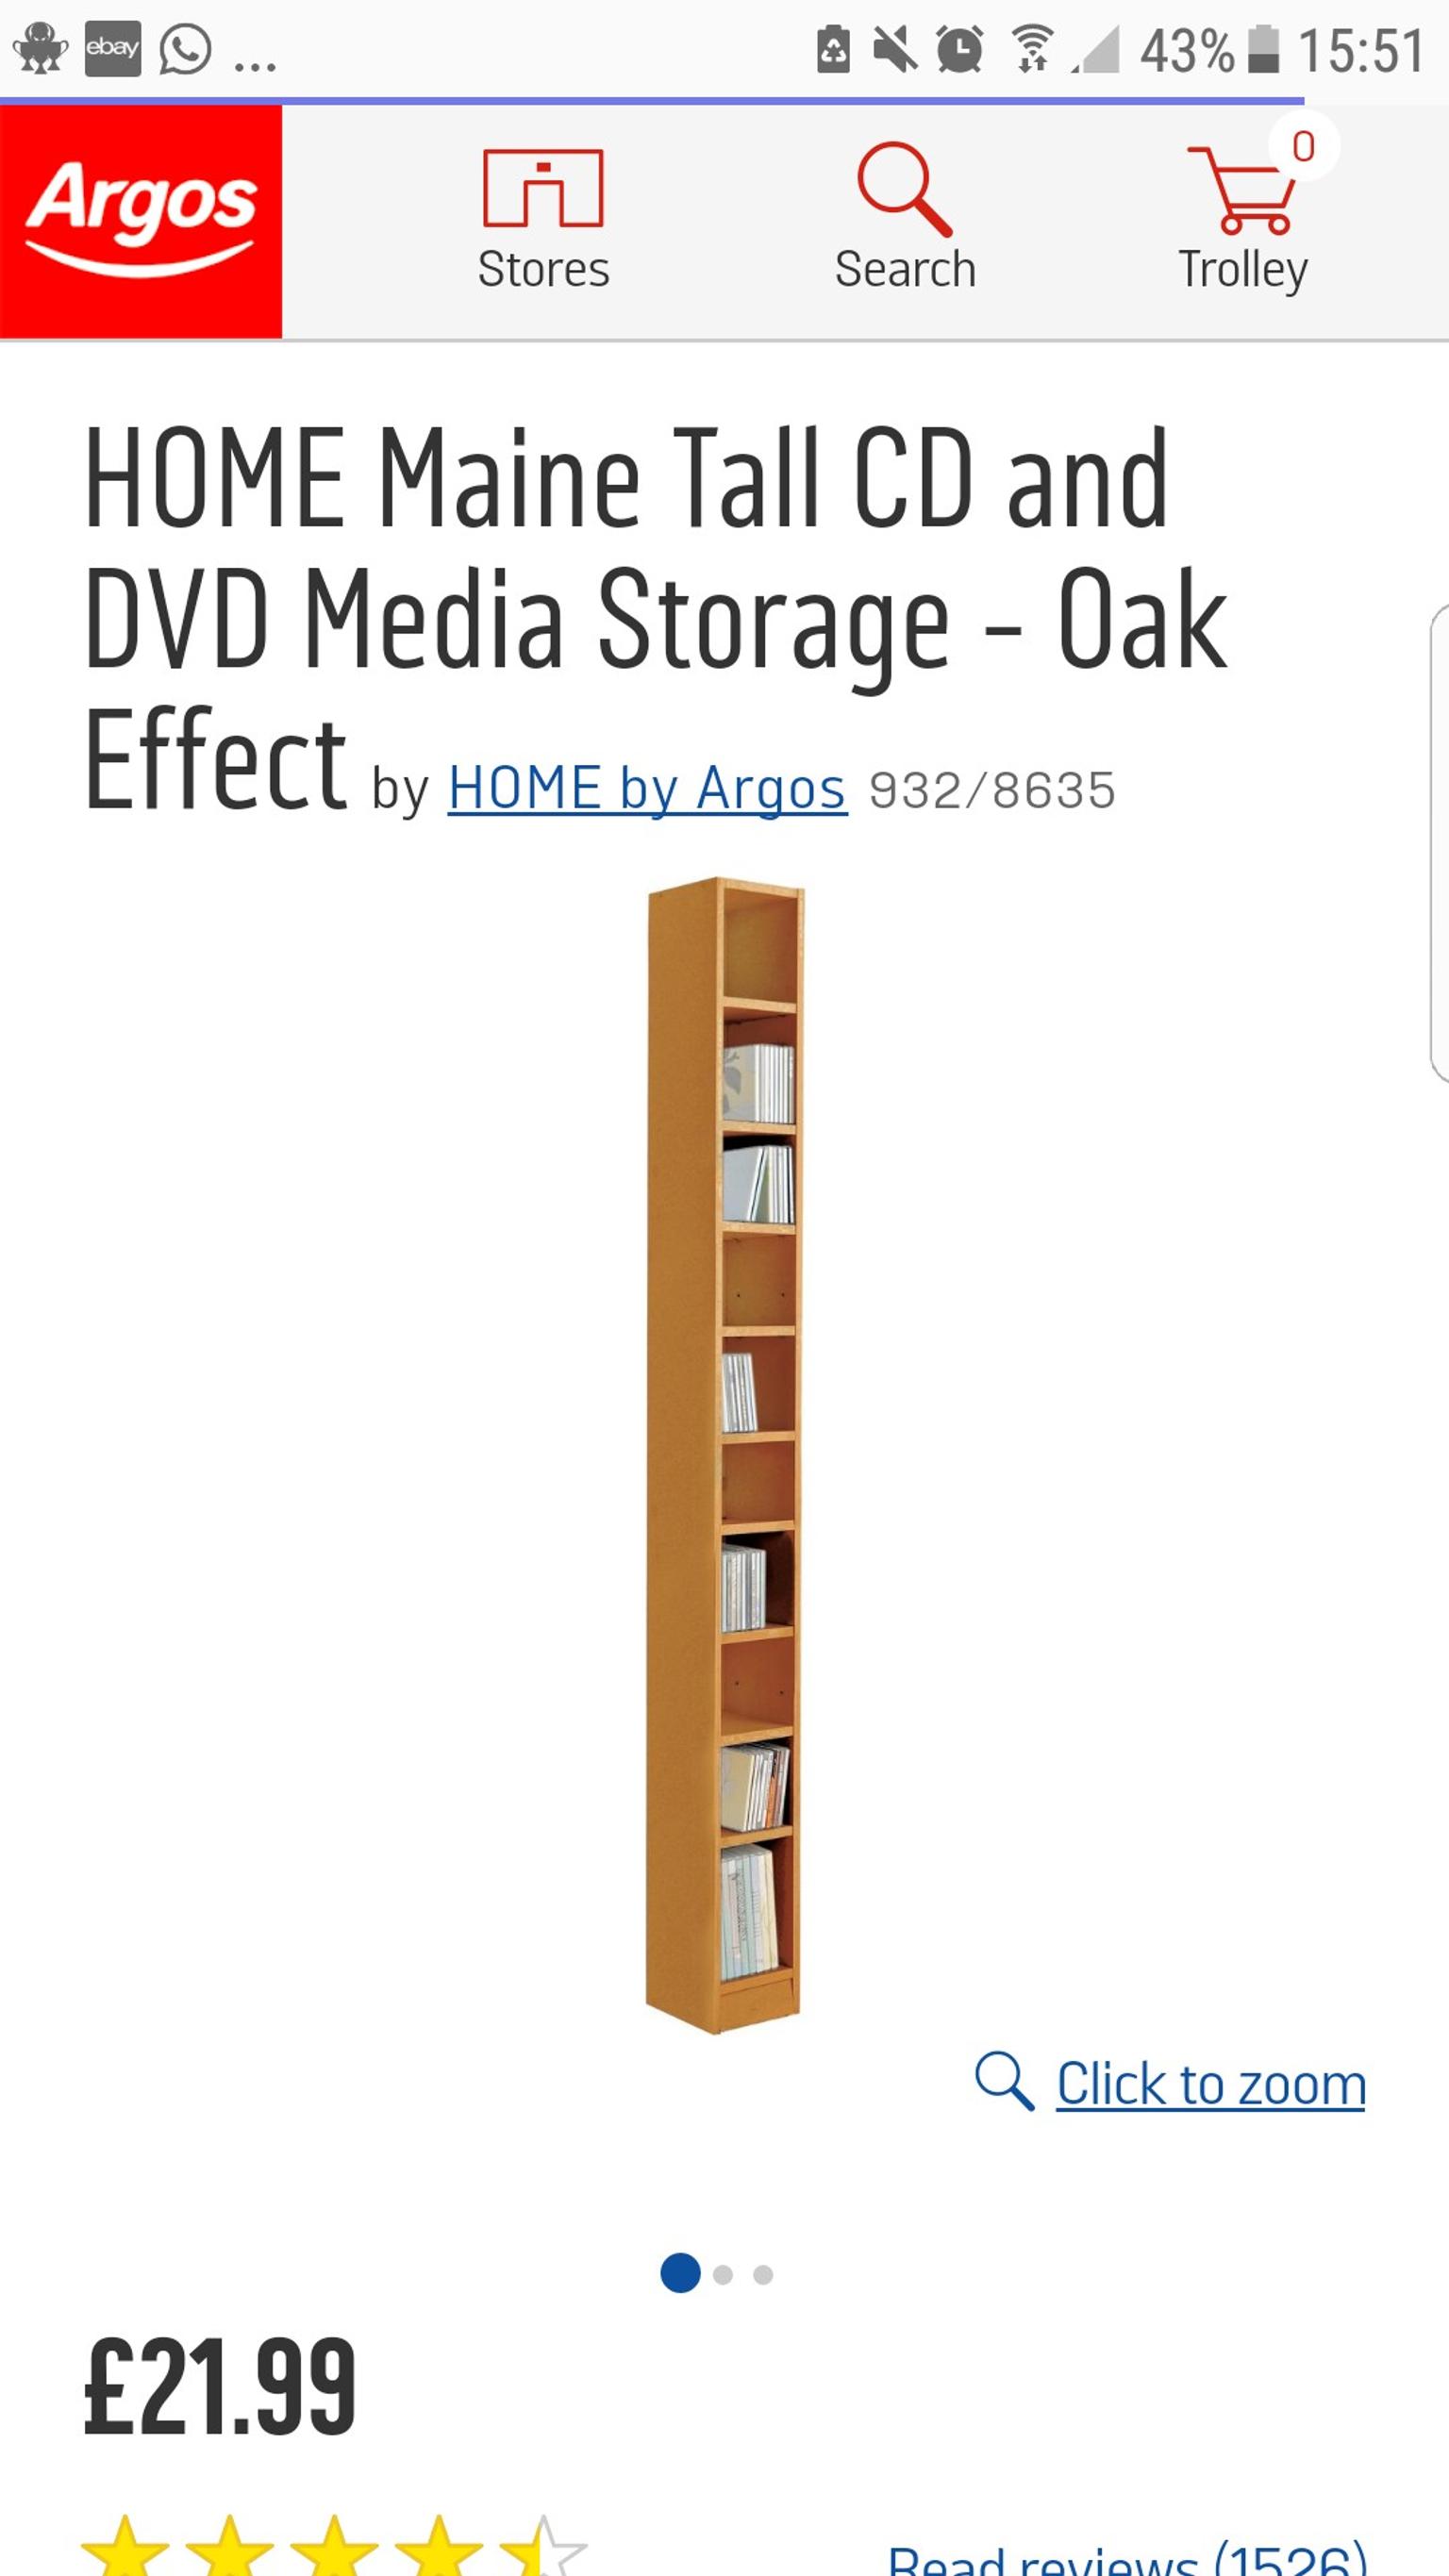 Argos Maine Tall Cd Dvd Storage Oak Effect In De24 Derby Fur 5